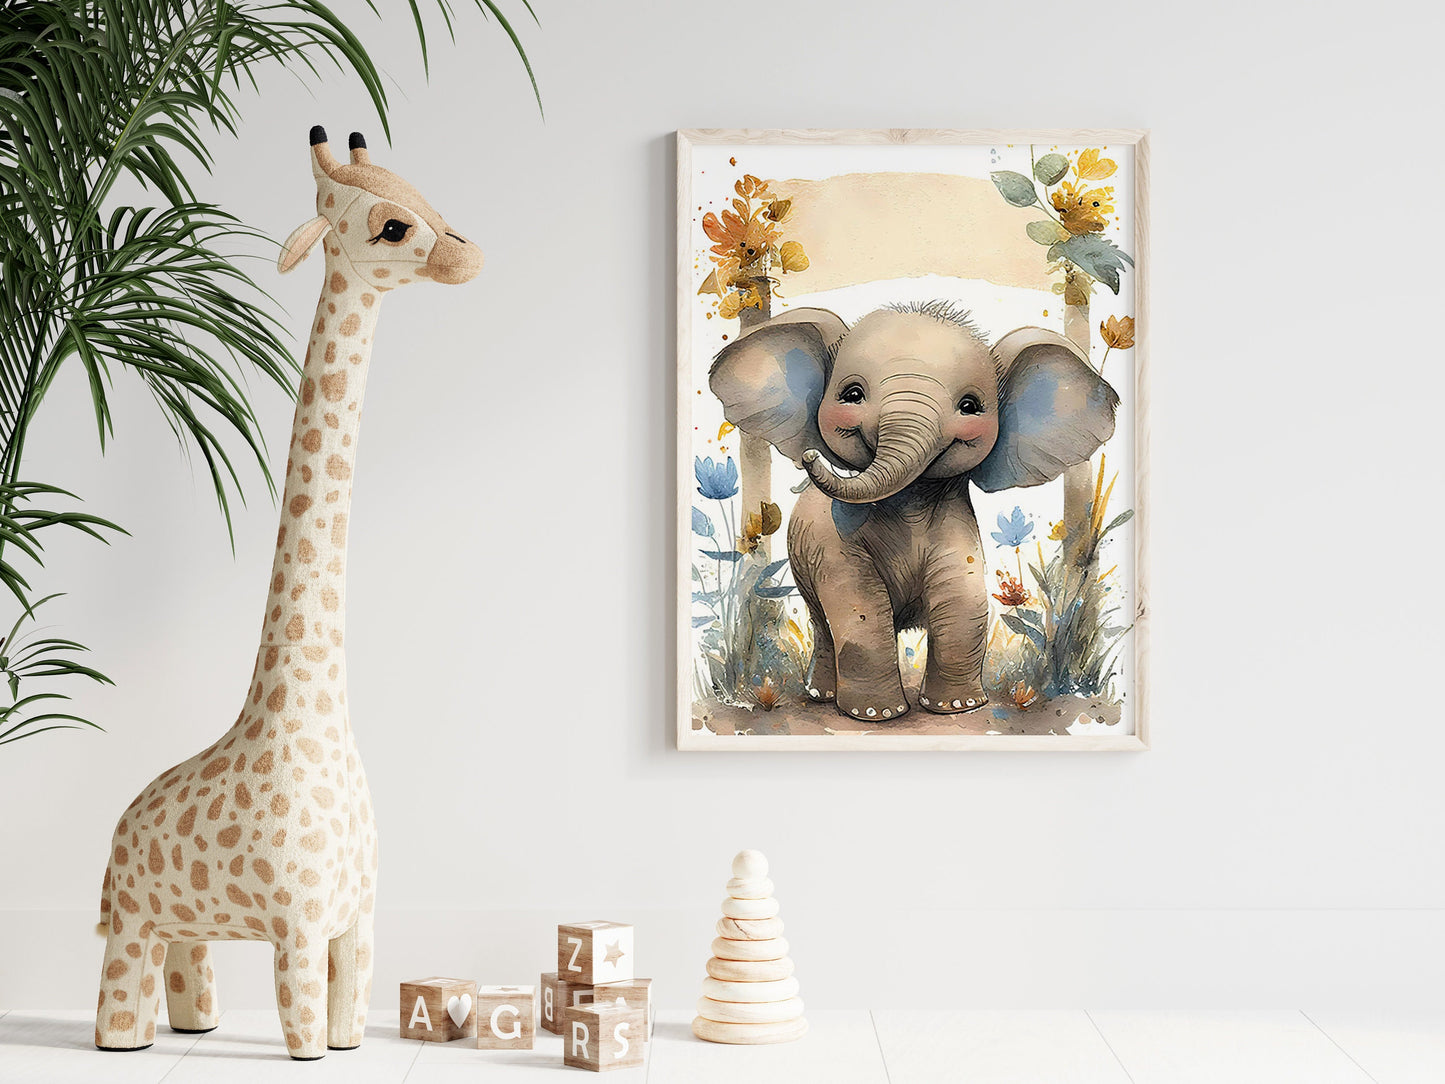 Poster Kinderzimmer Tiere Wald Dschungel Aquarell Löwe Elefant I Kinderzimmer Bilder I Wand Deko I Kunst Druck I Deko Print I ohne Rahmen